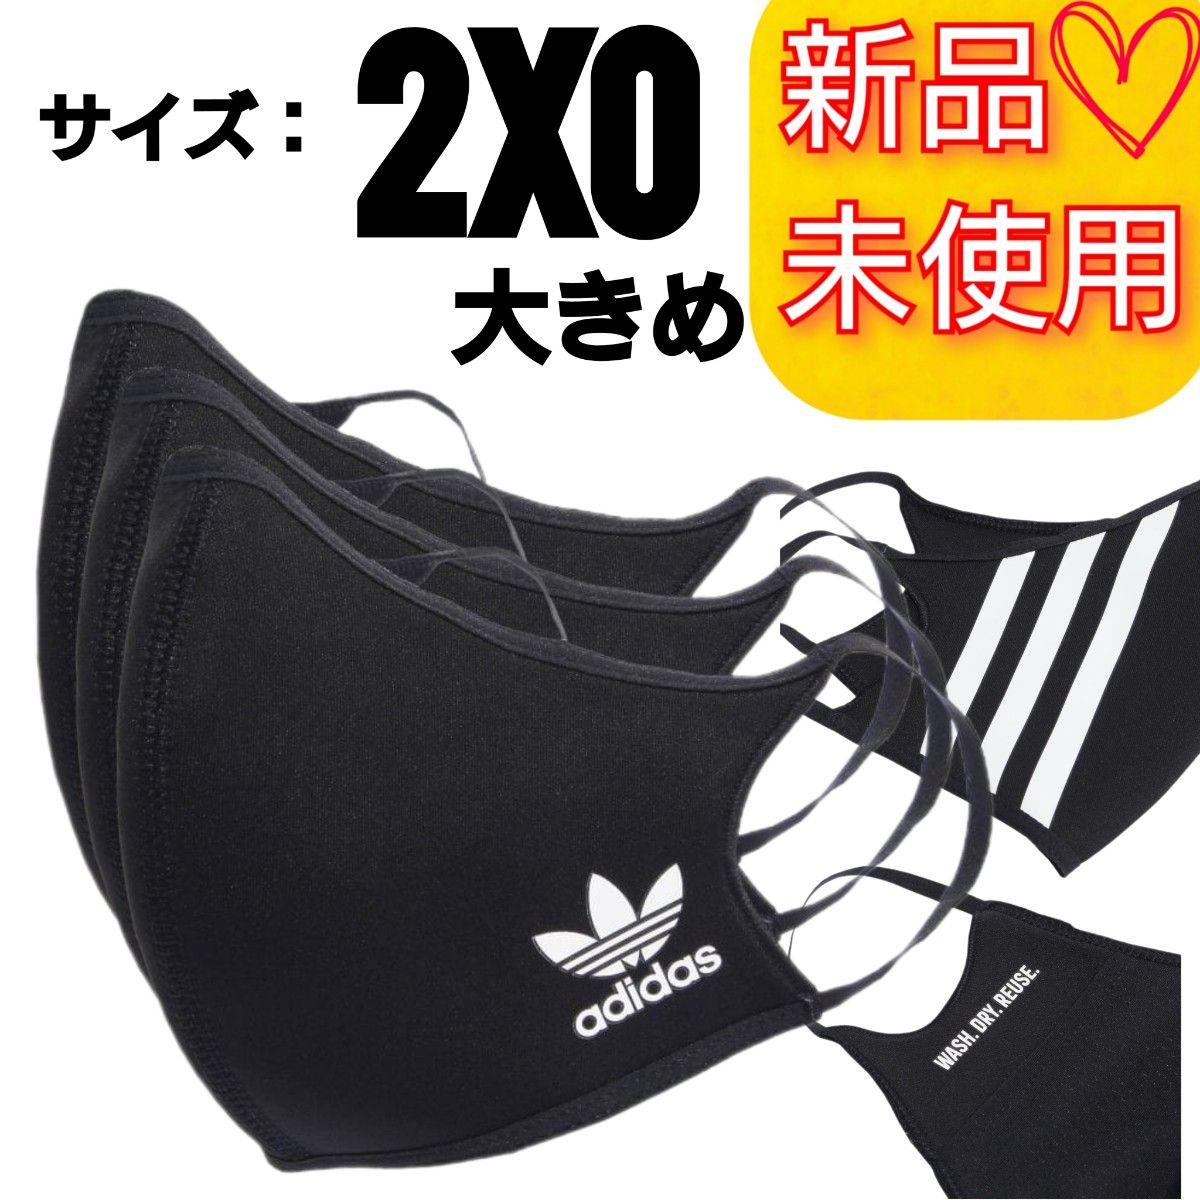 【2XO】アディダスオリジナルス フェイスカバー マスク 3枚組 新品未使用 男女兼用 防寒 防風 花粉対策 トレーニング